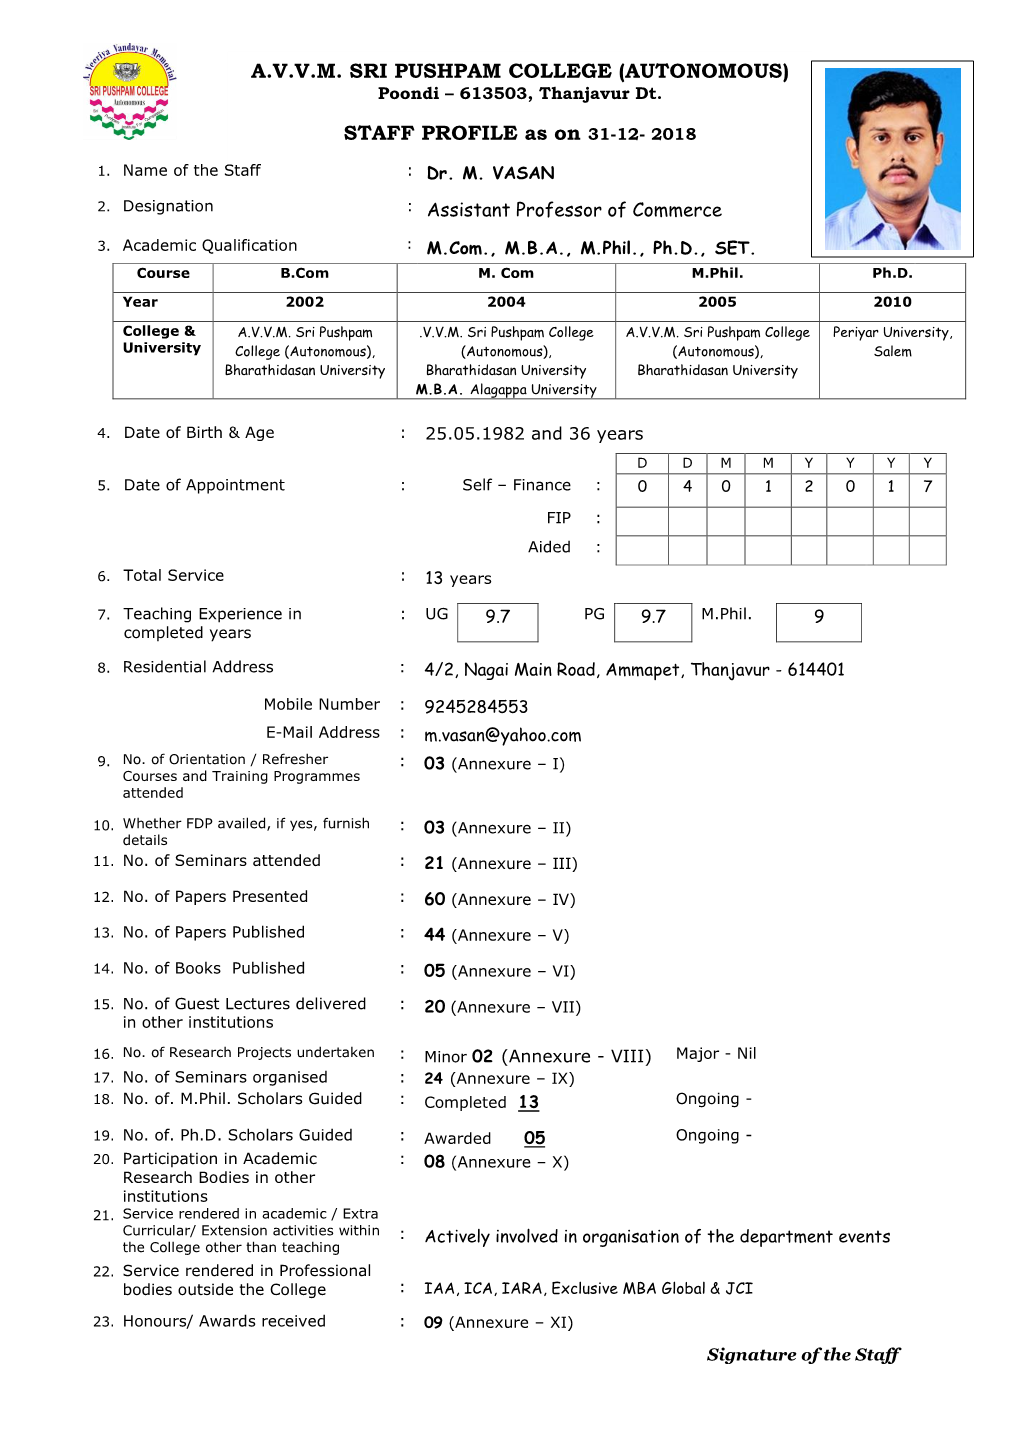 A.V.V.M. Sri Pushpam College (Autonomous) Staff Profile